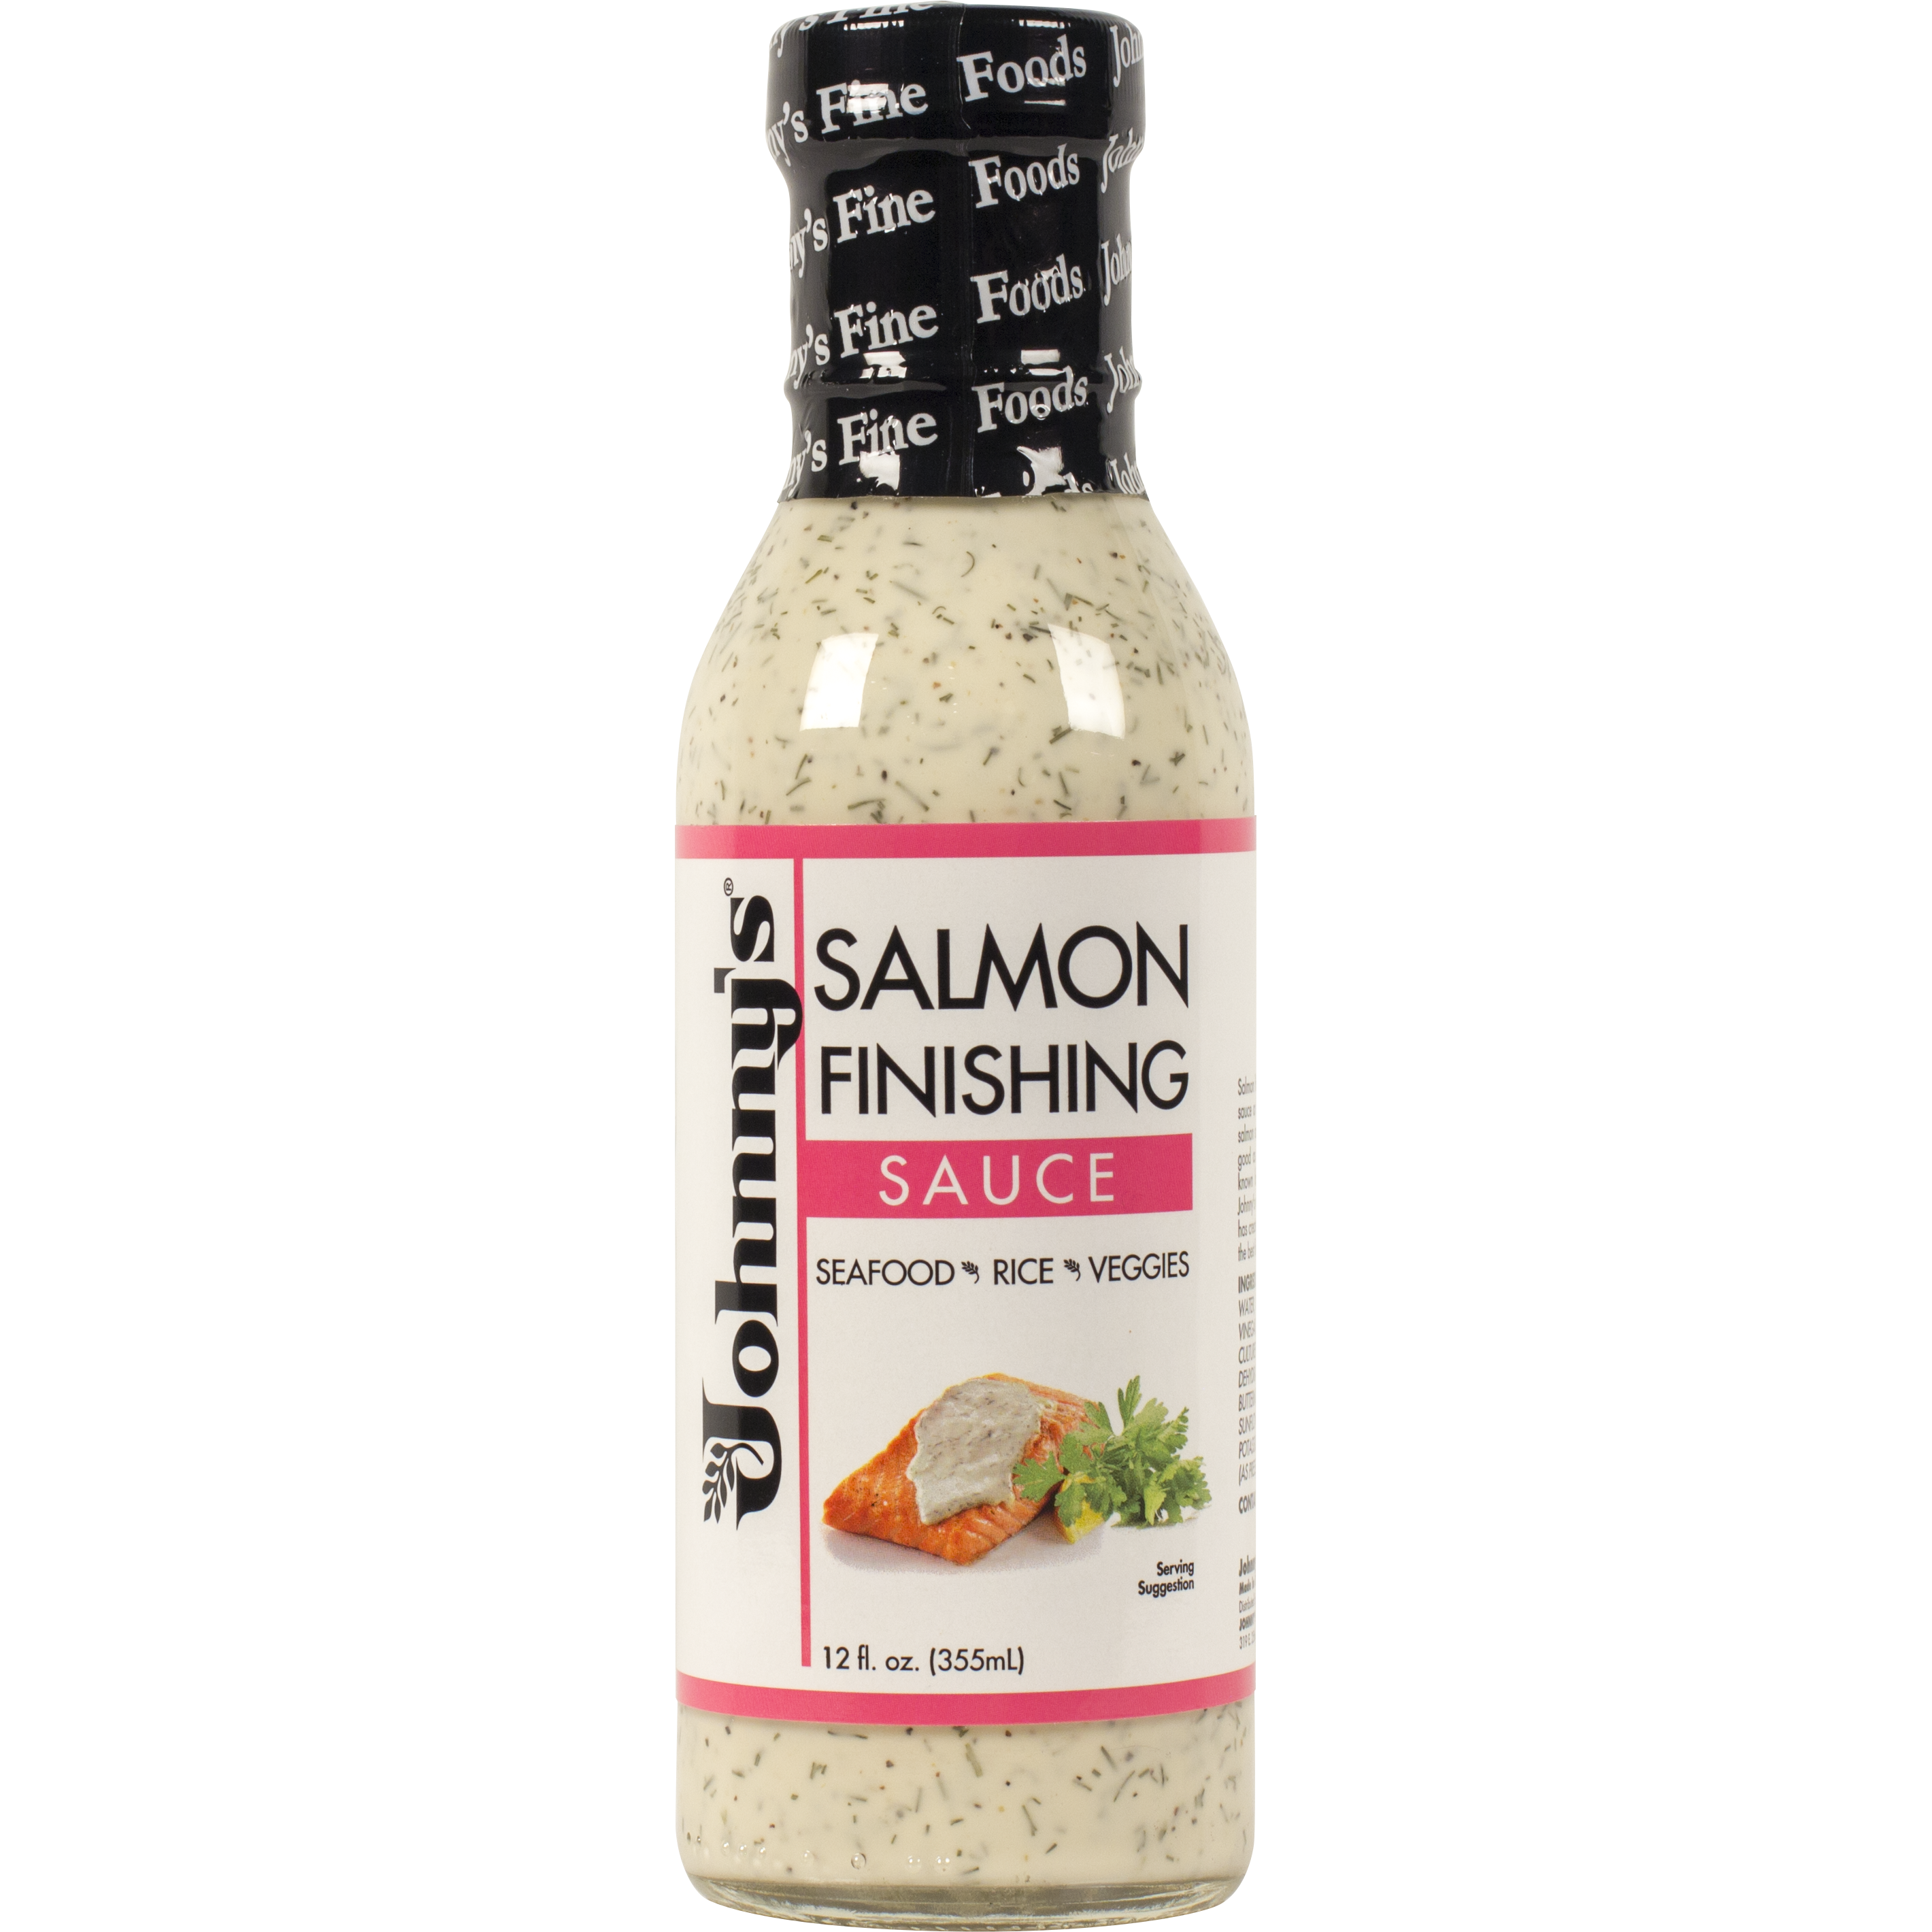 Salmon Finishing Sauce